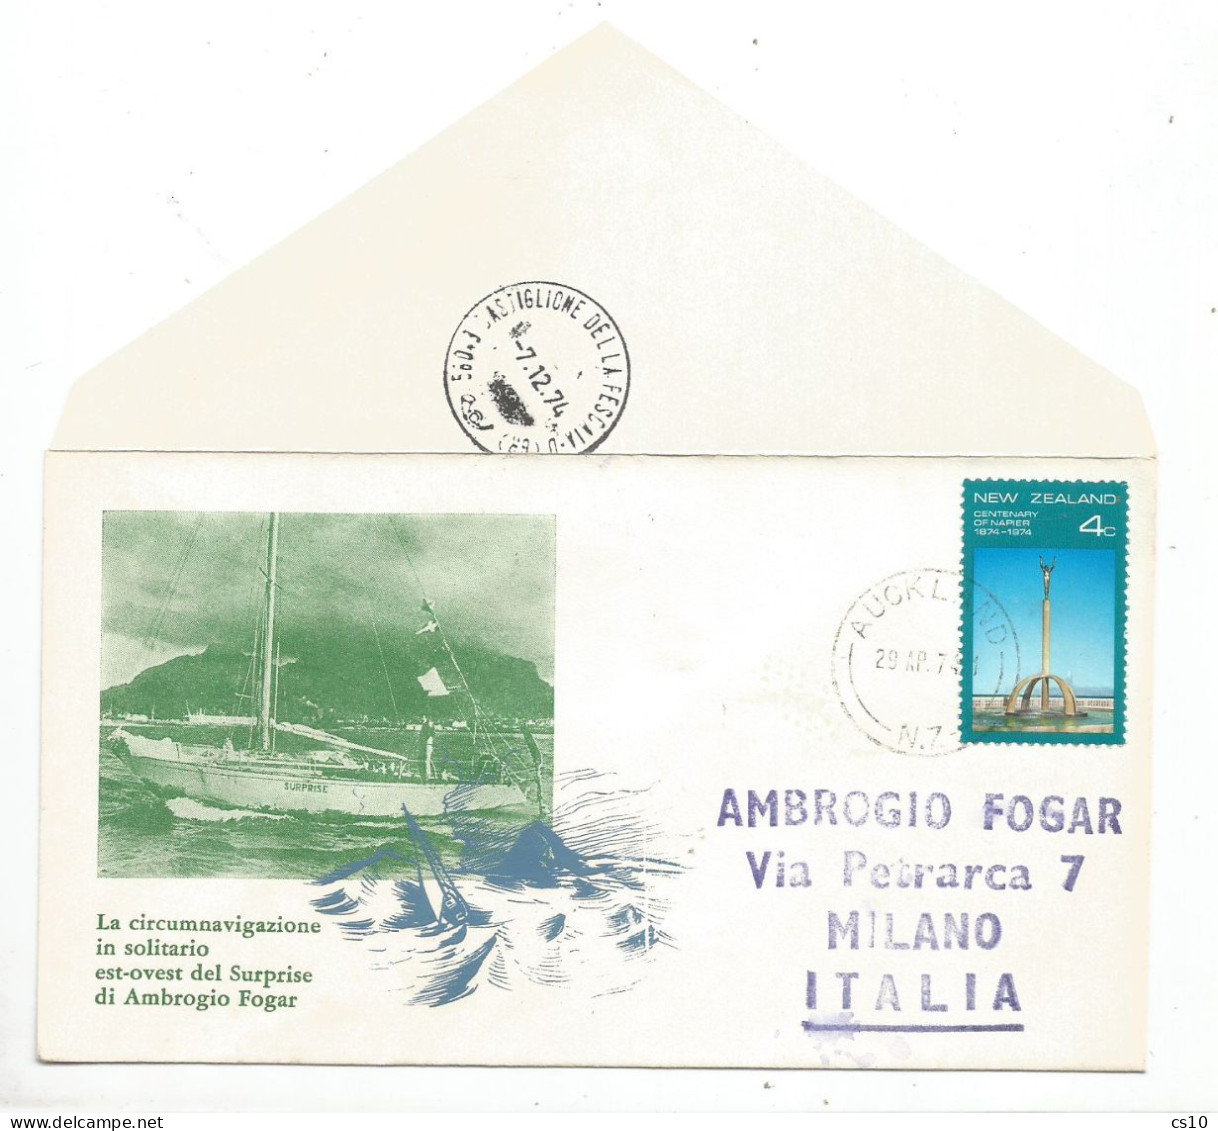 Vela Sailing SOLO Circumnavigation - Ambrogio Fogar On Surprise Yacht - Official CV Auckland 29apr1974 X Italy 7dec74 - Zeilen